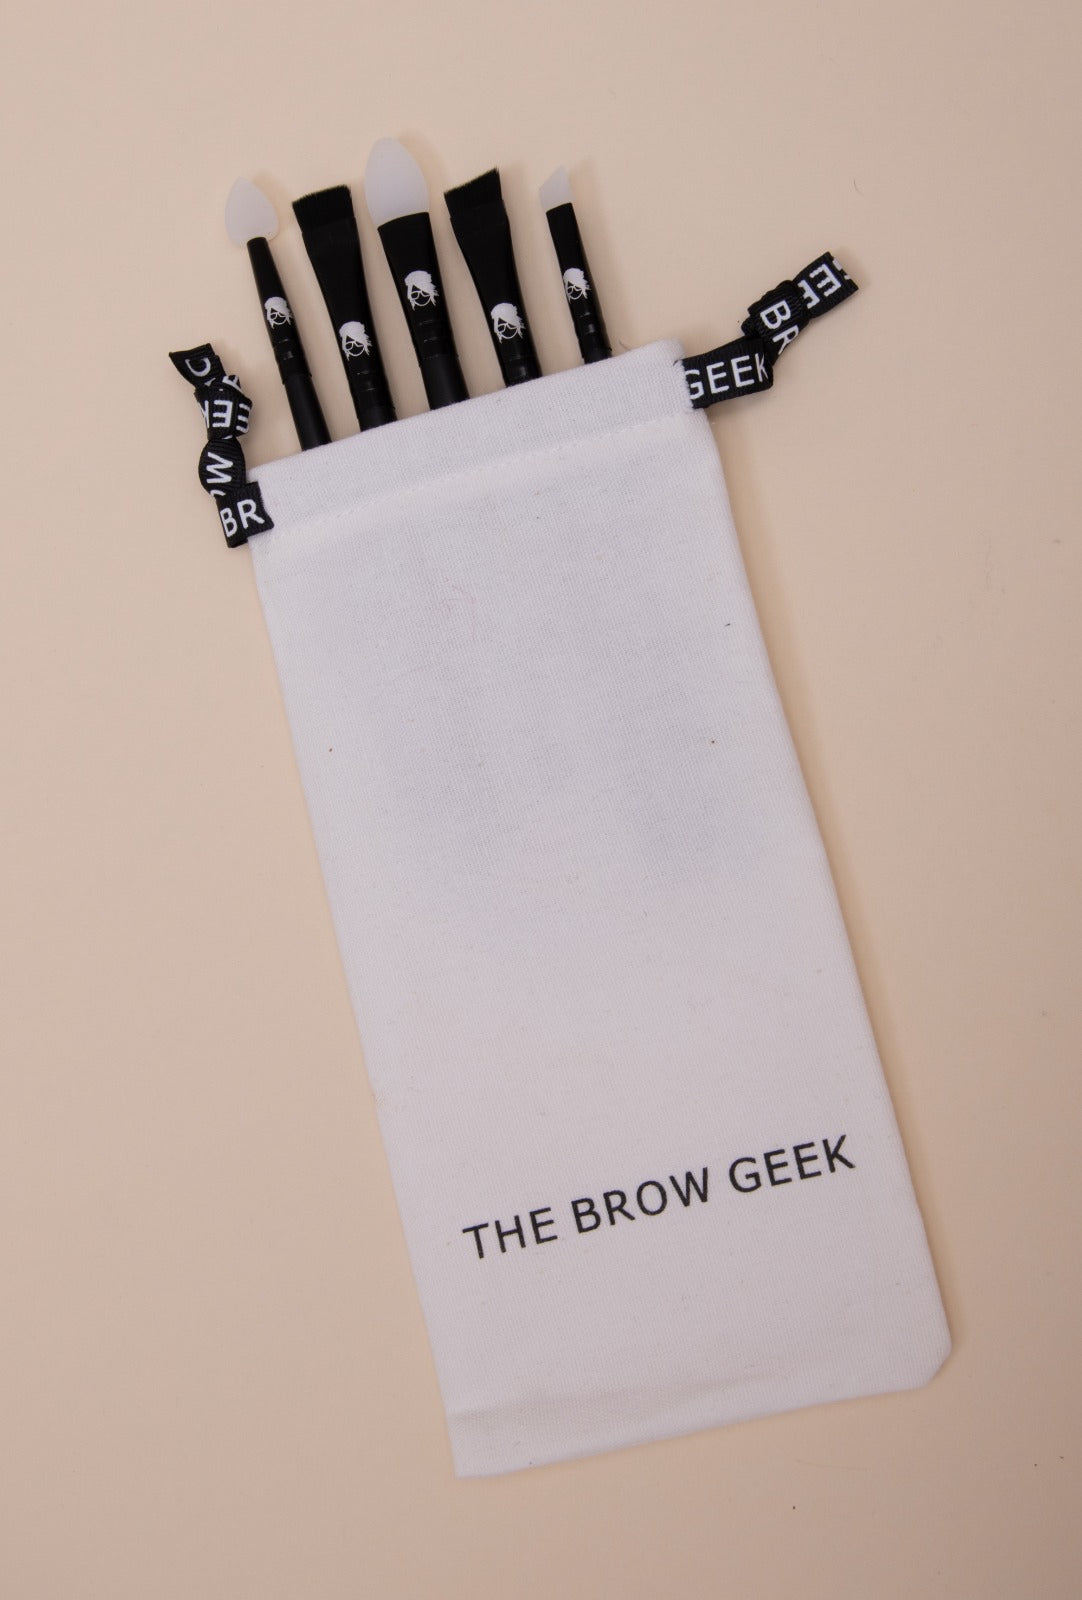 The Brow Geek™ Tus brochas de varitas mágicas